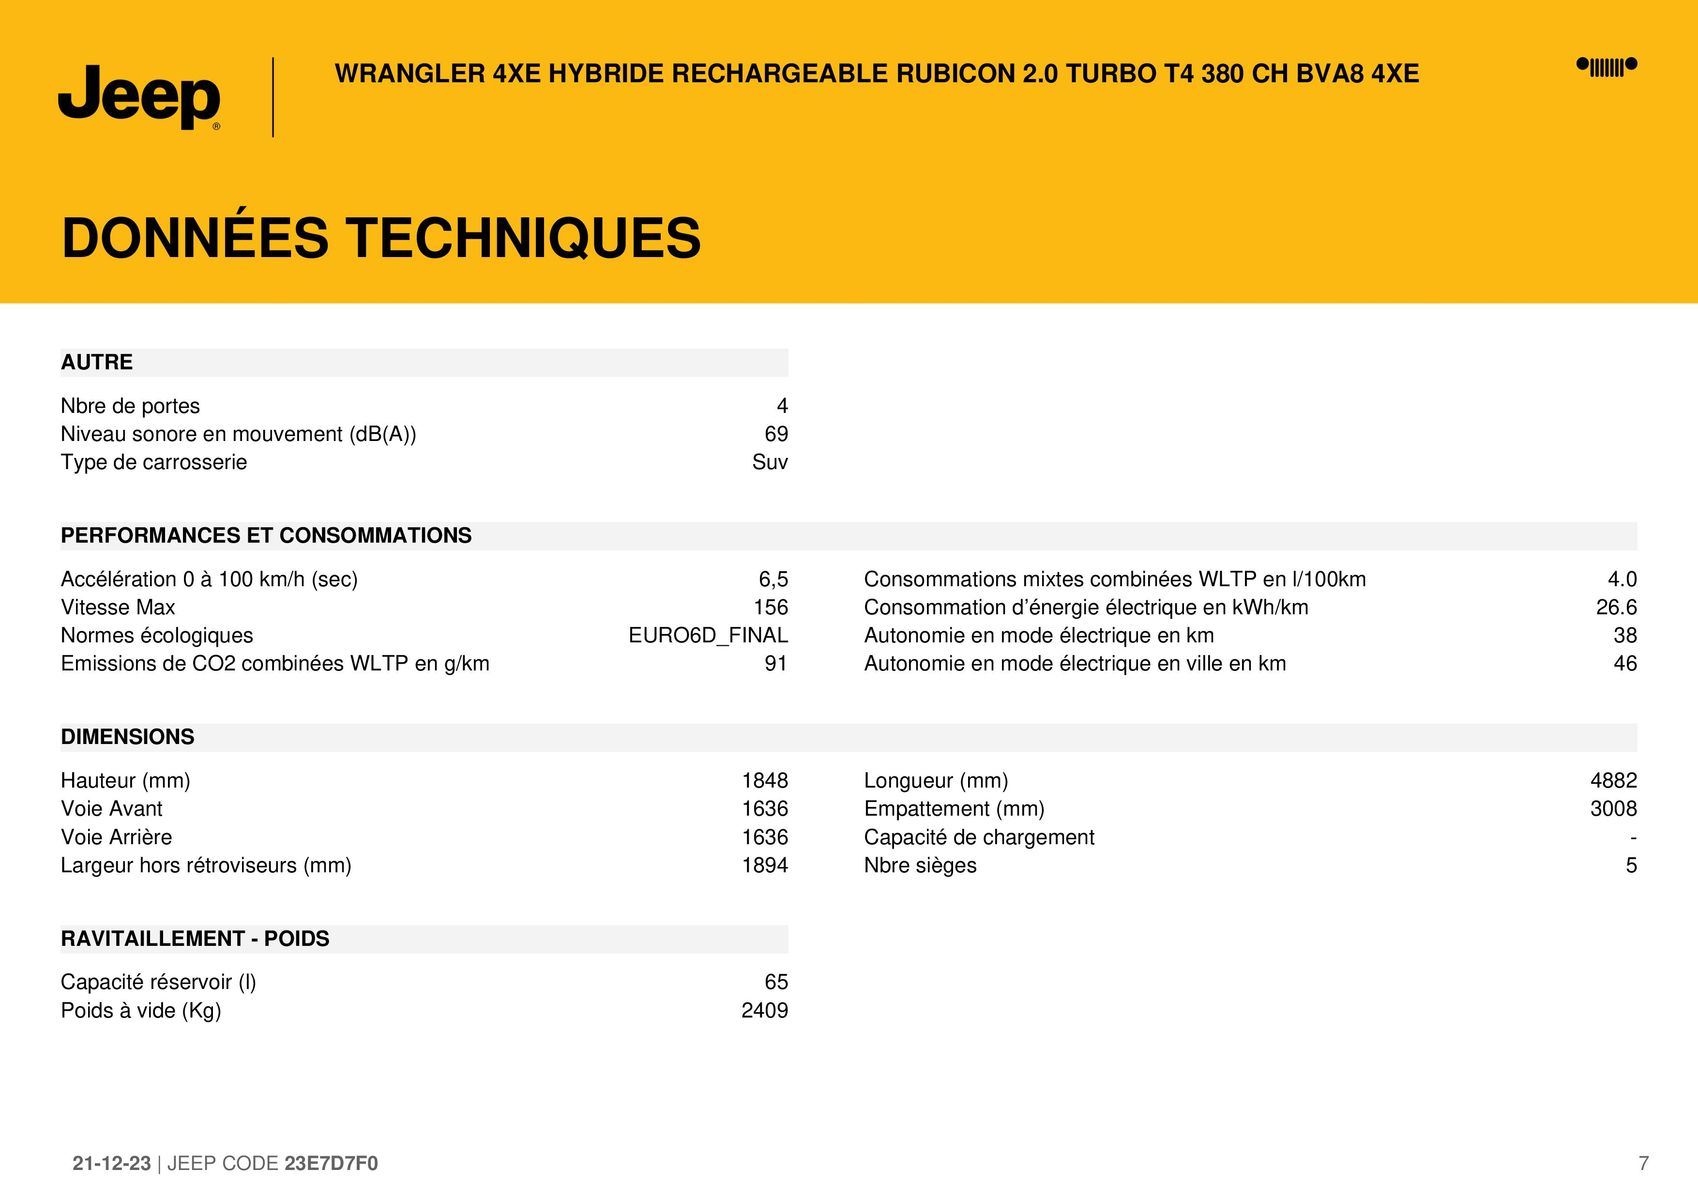 Catalogue WRANGLER 4XE HYBRIDE RECHARGEABLE RUBICON 2.0 TURBO T4 380 CH BVA8 4XE,, page 00007